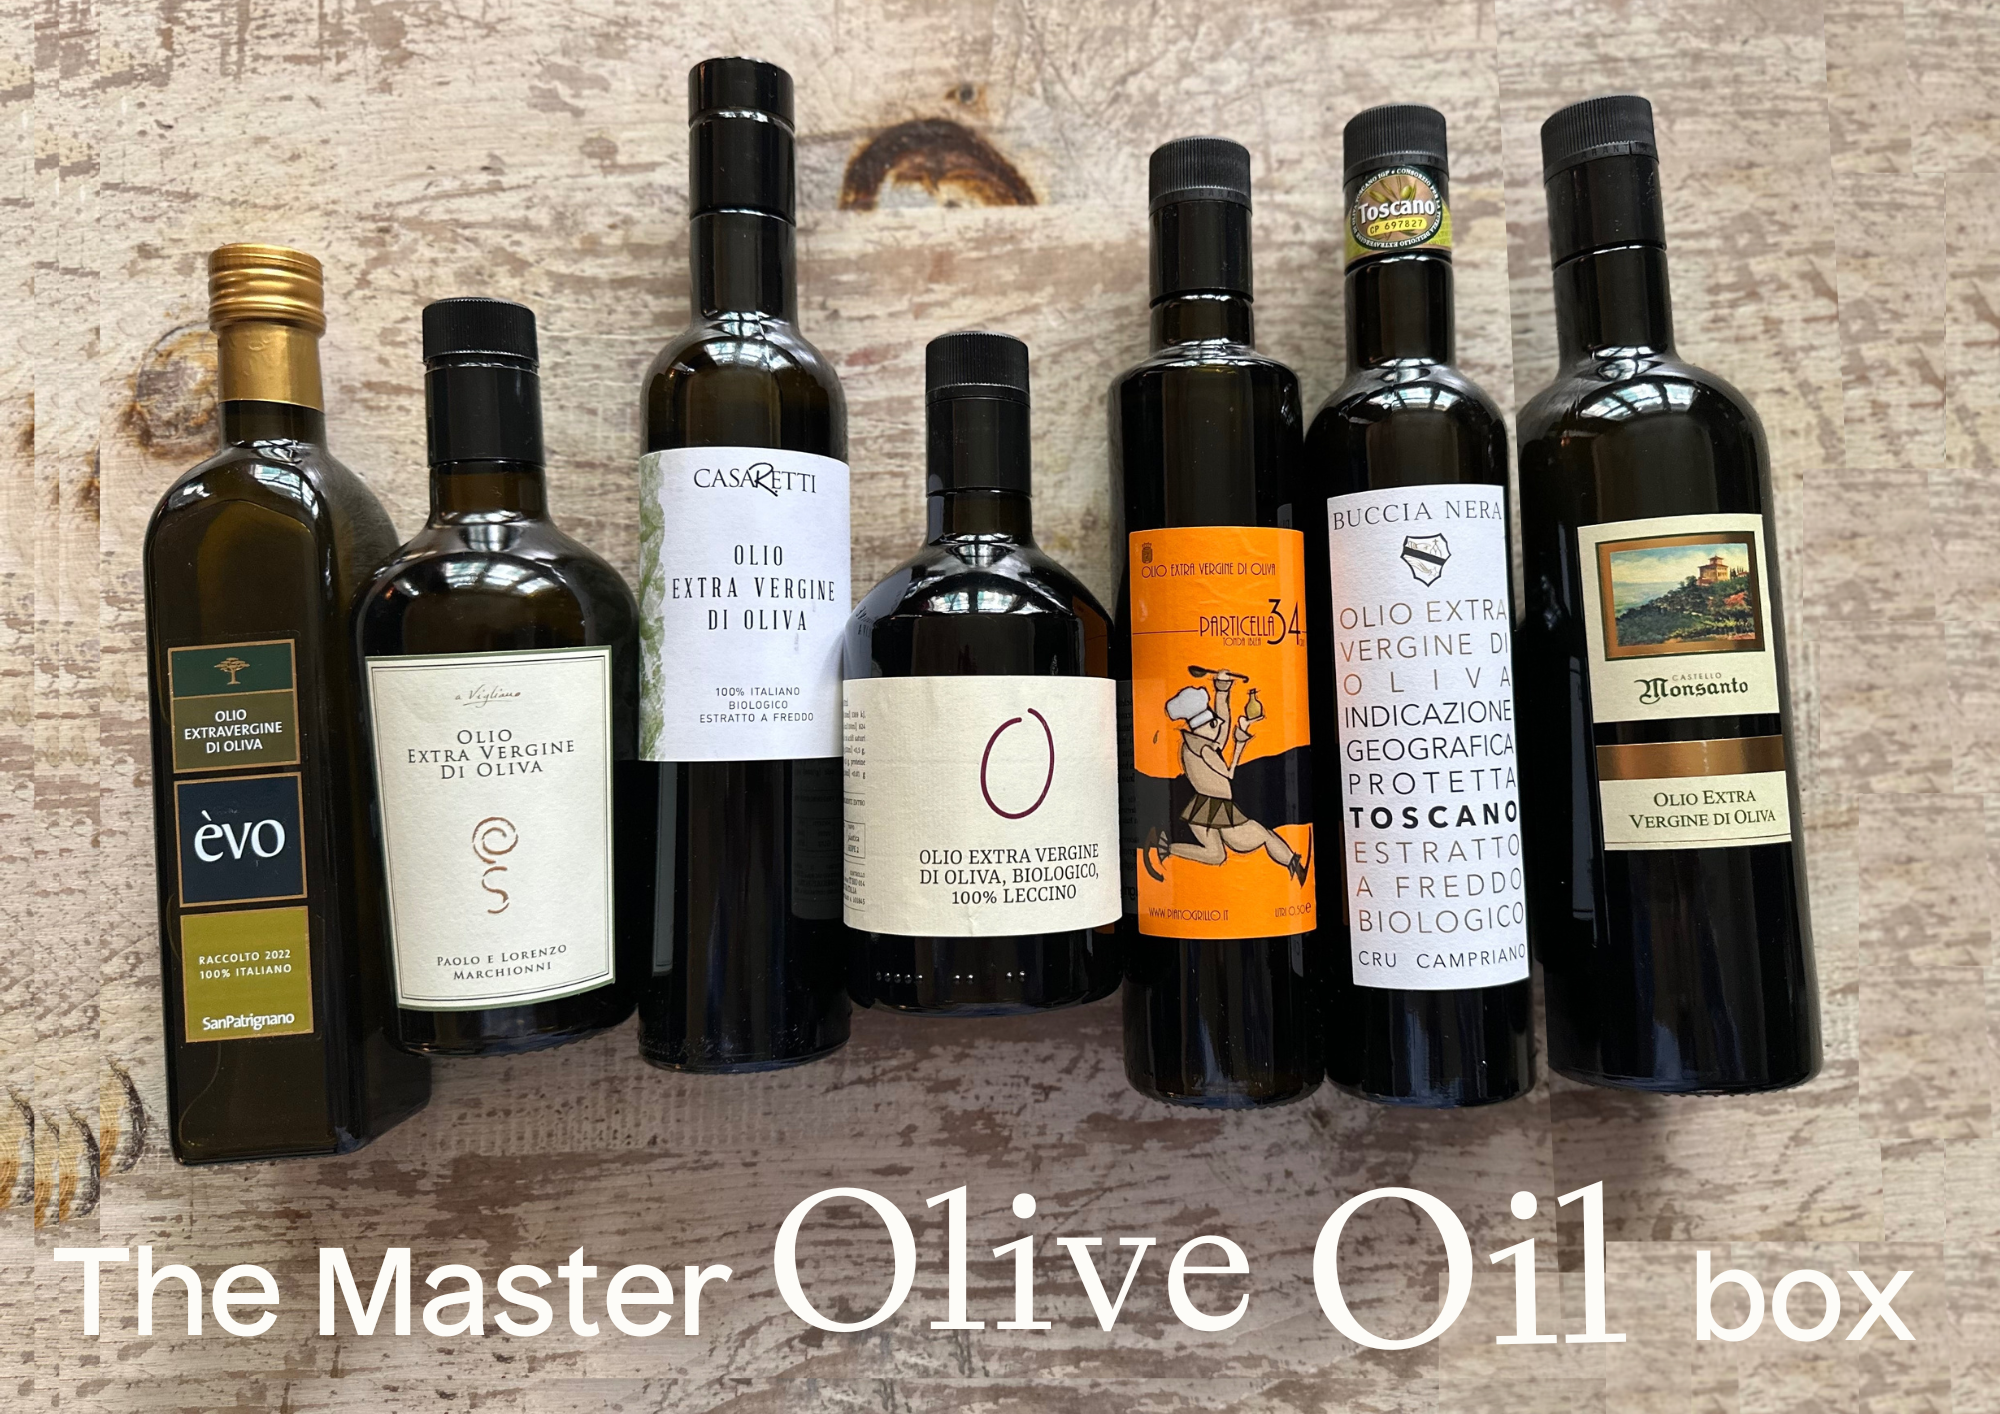 The "Master" Olive Oil box